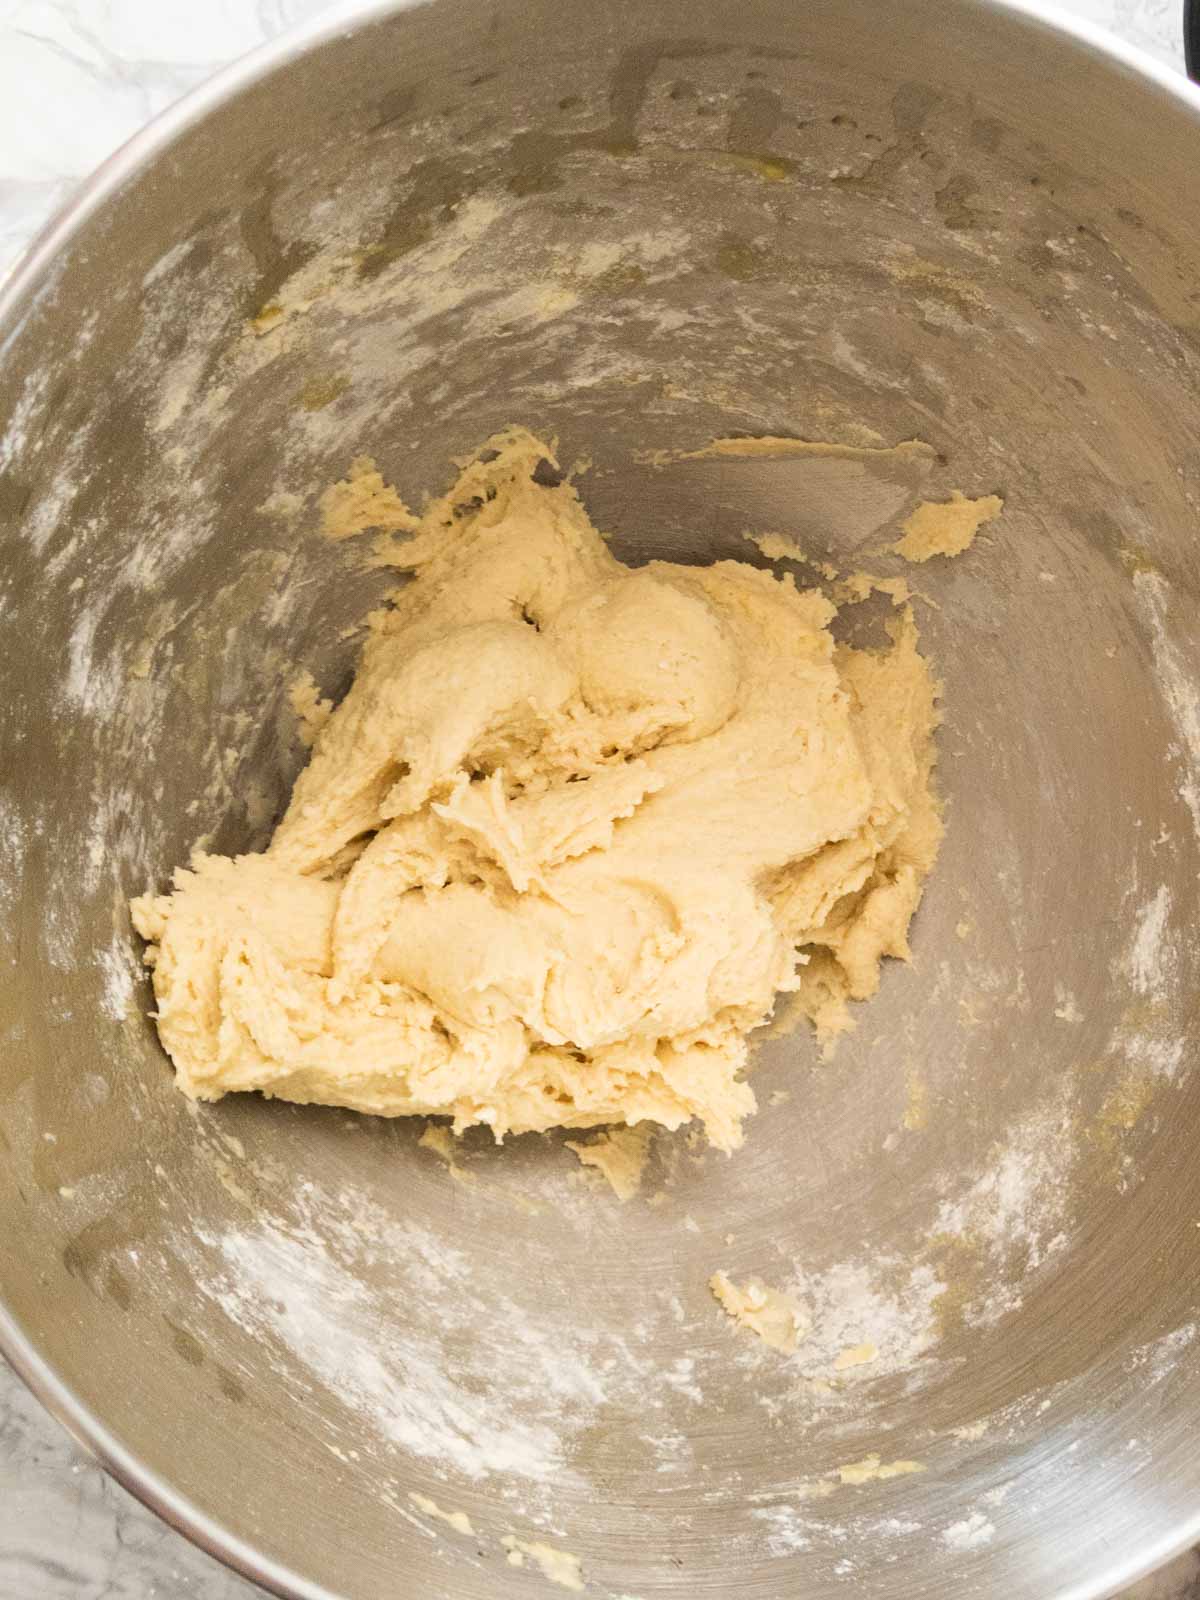 kneaded dough in bowl